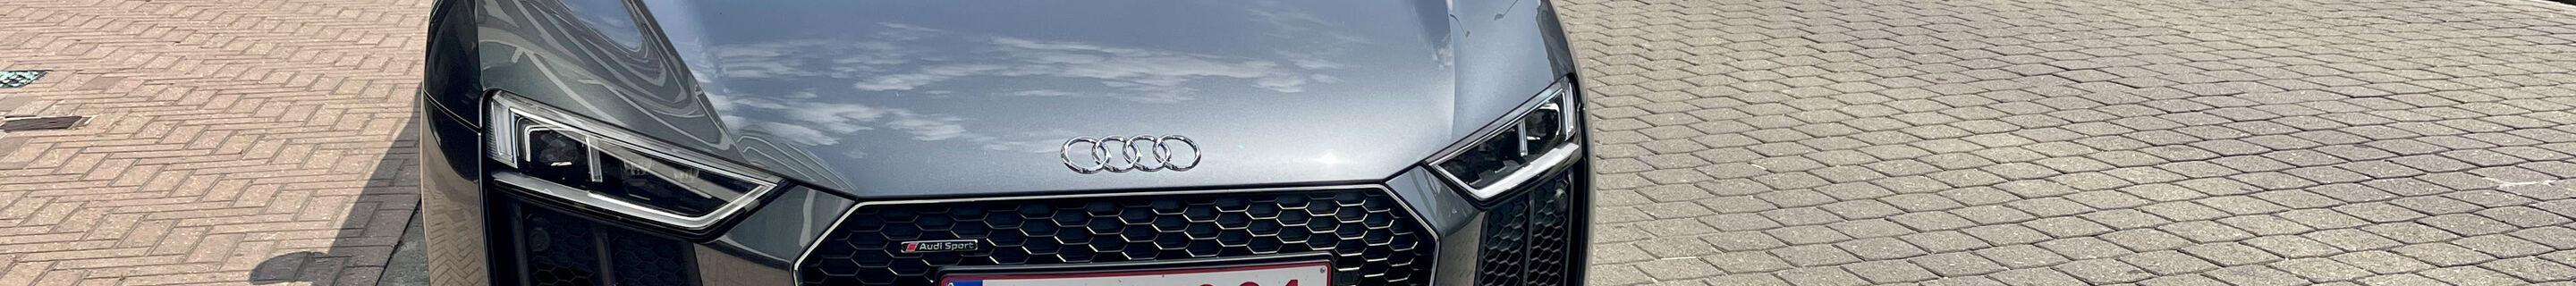 Audi R8 V10 Spyder 2016